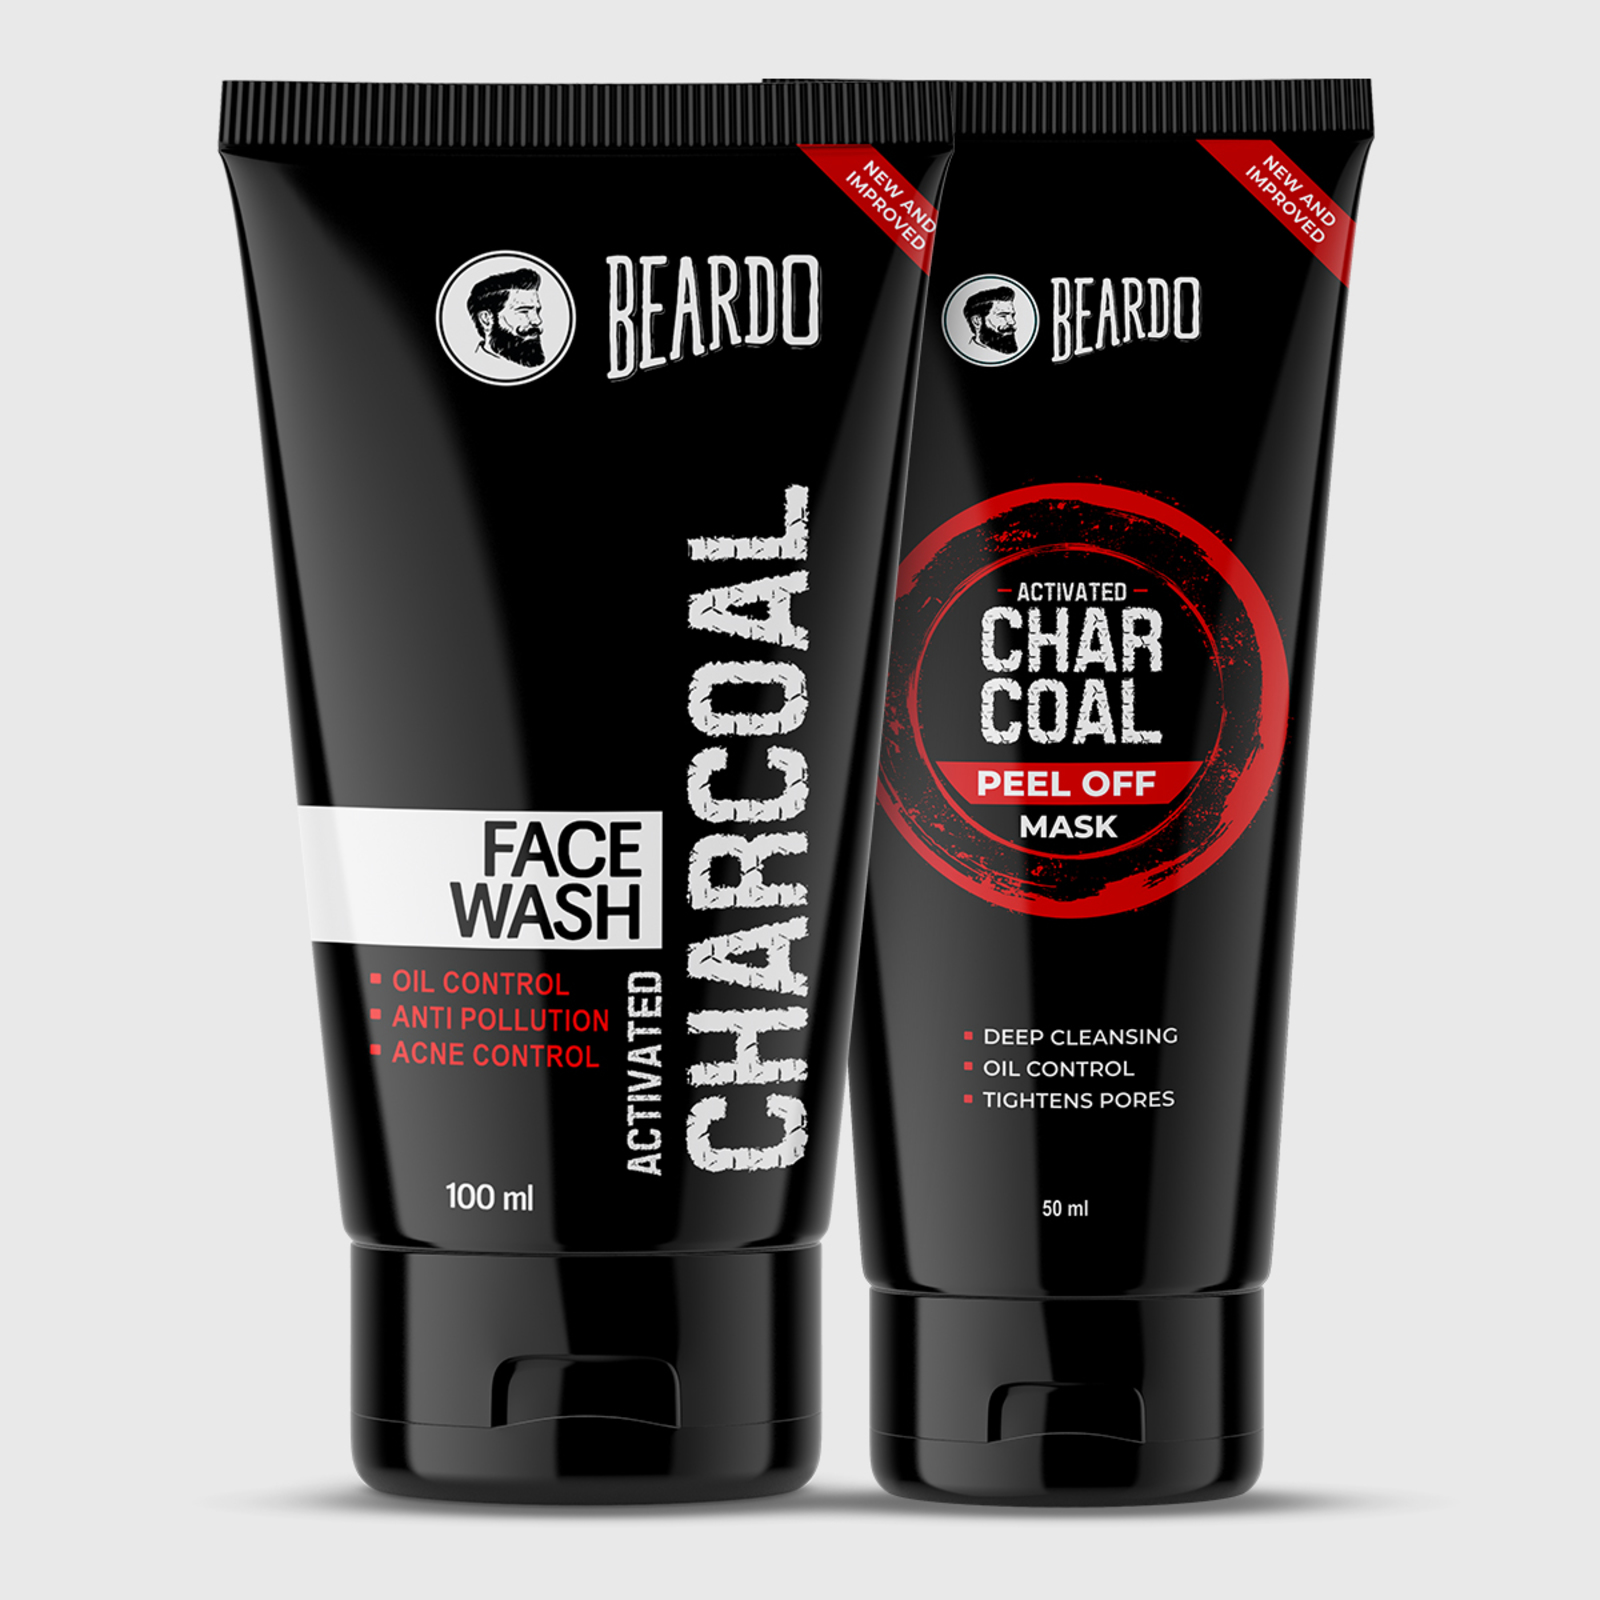 Beardo Activated Charcoal Facewash & Peel Off Mask Combo coupon code